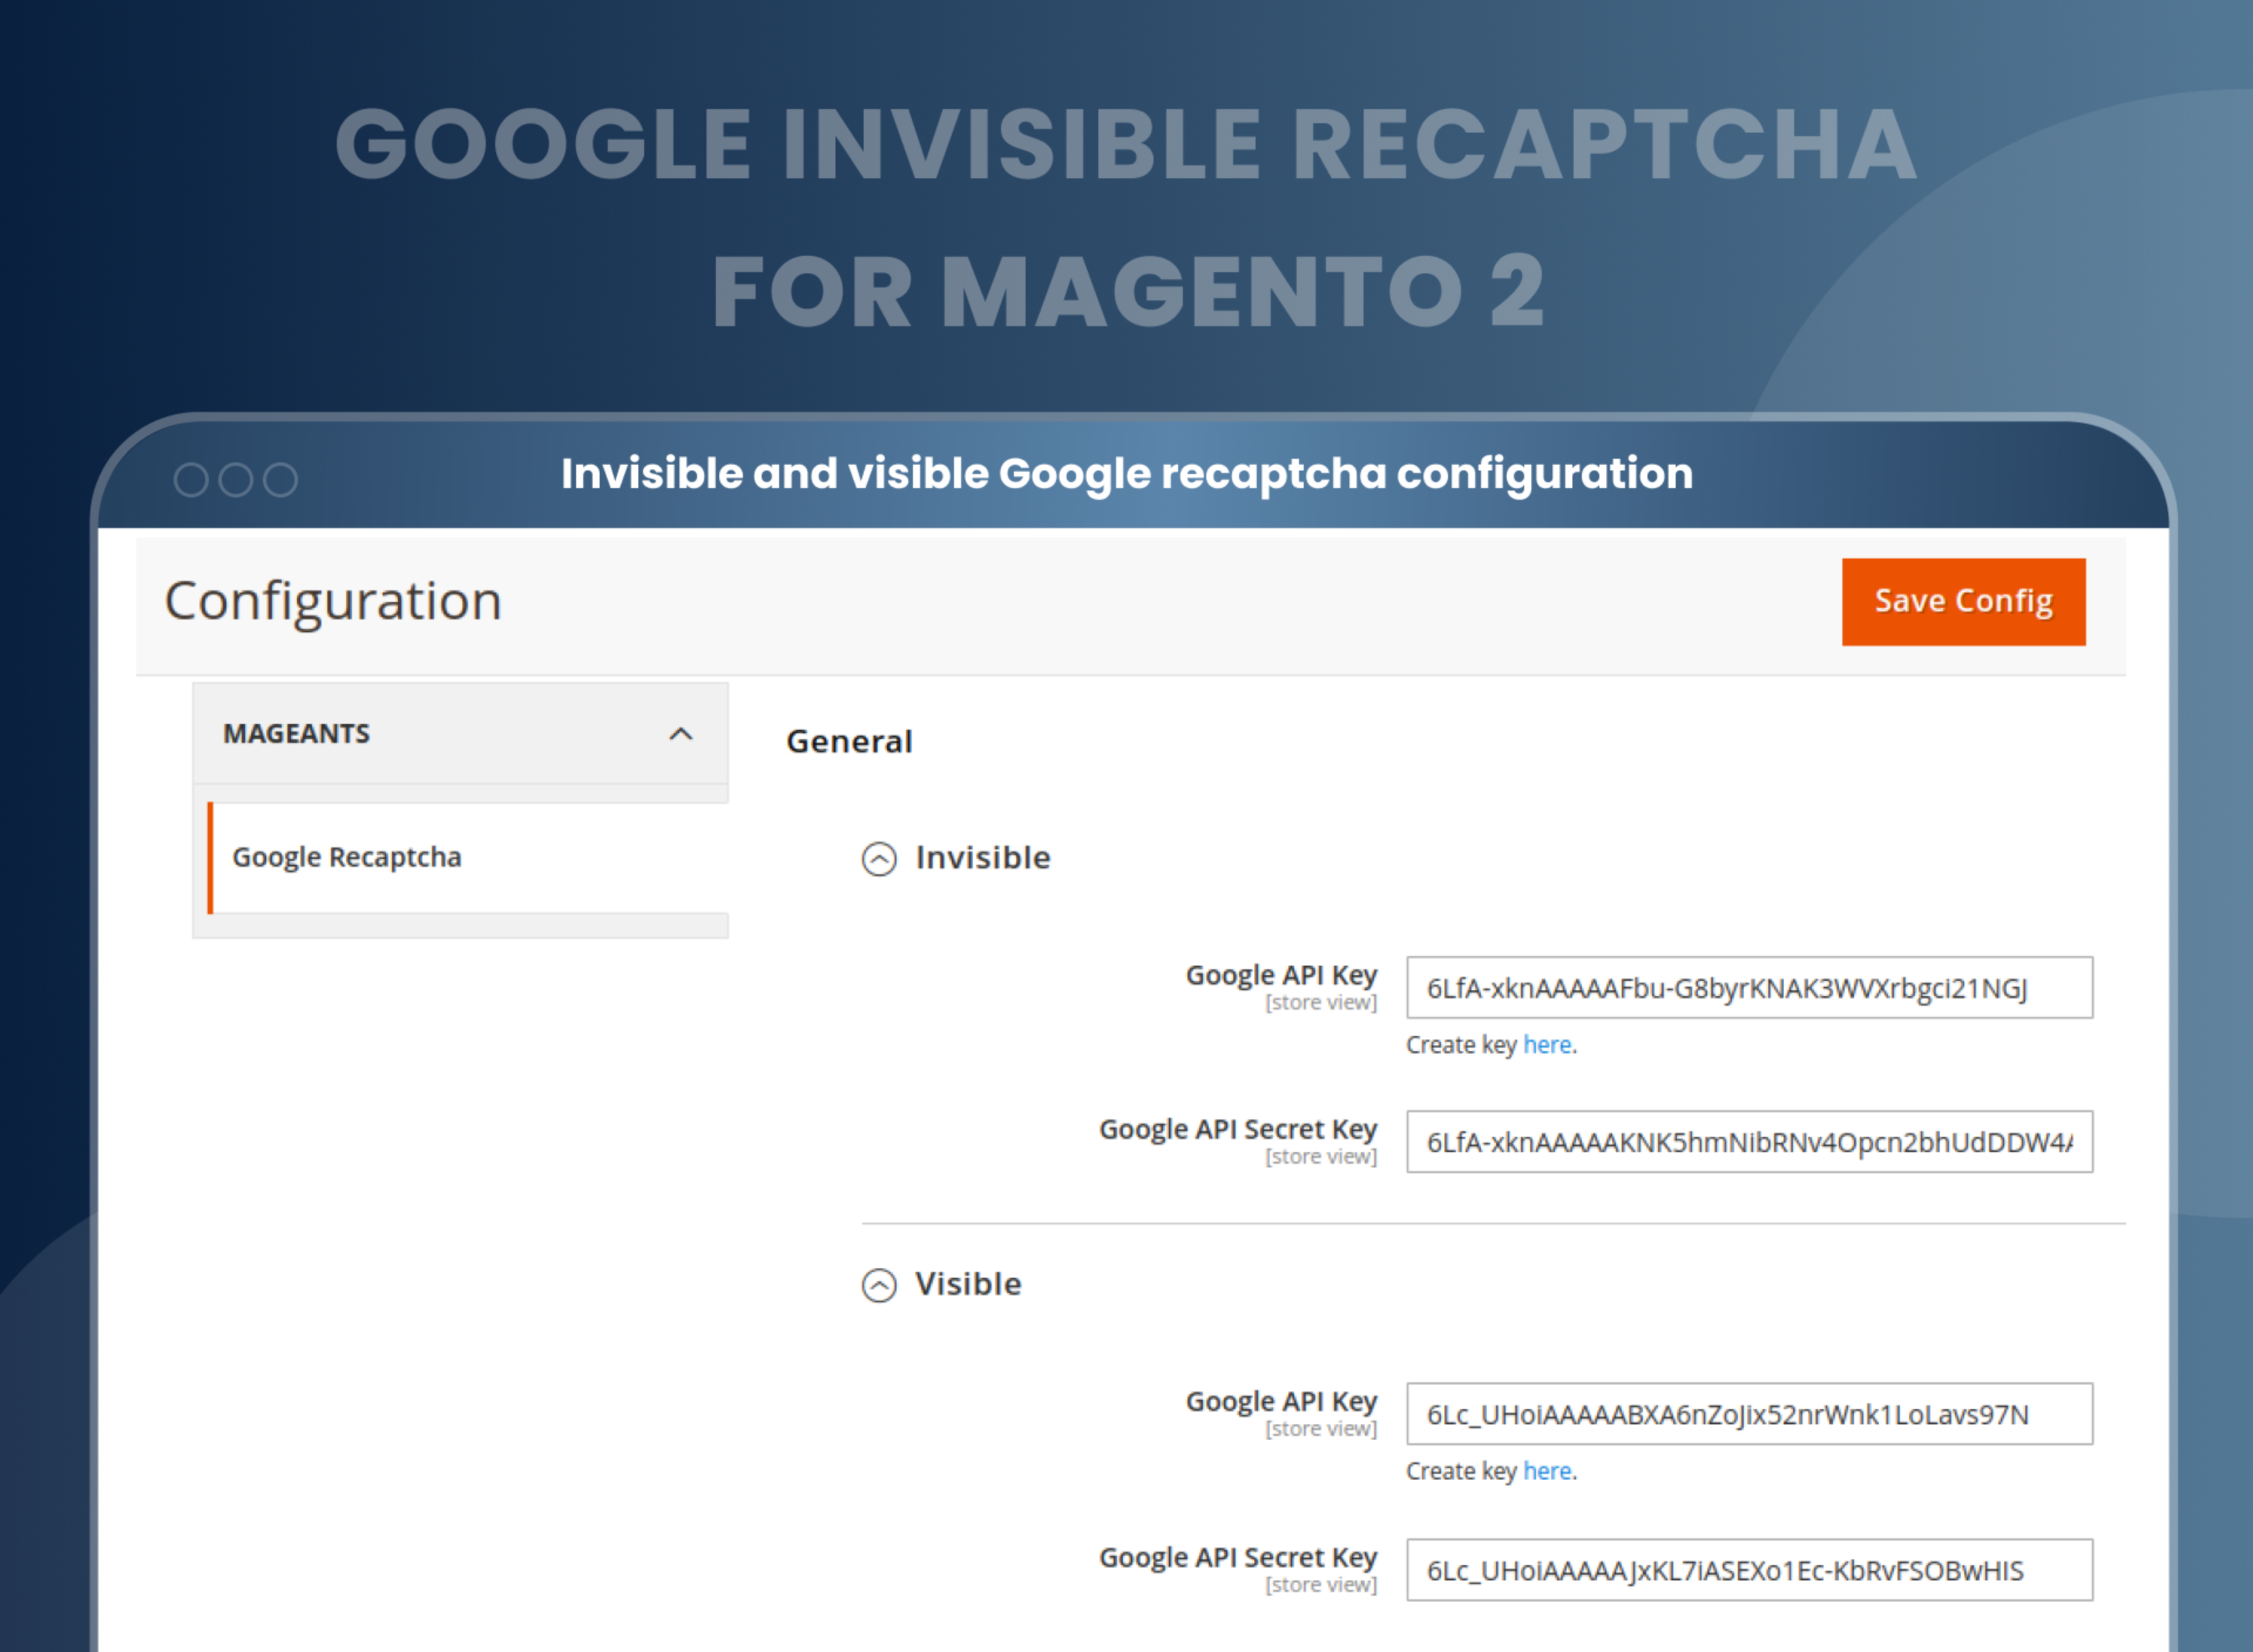 Invisible and visible Google recaptcha configuration